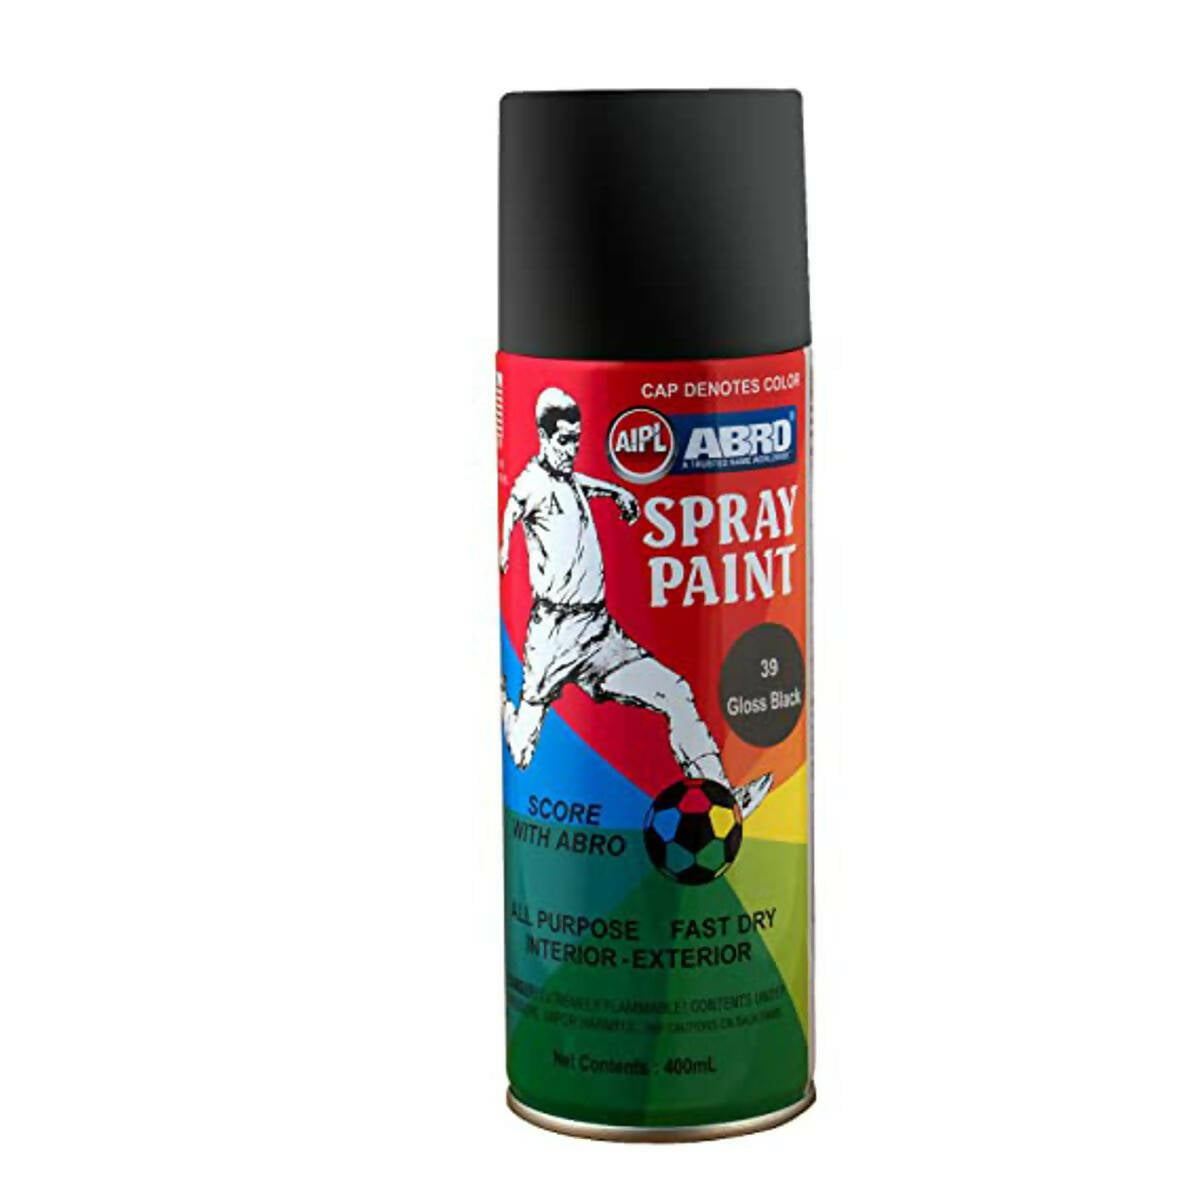 Spray Paint BUROOJ - FLAT Black - 39